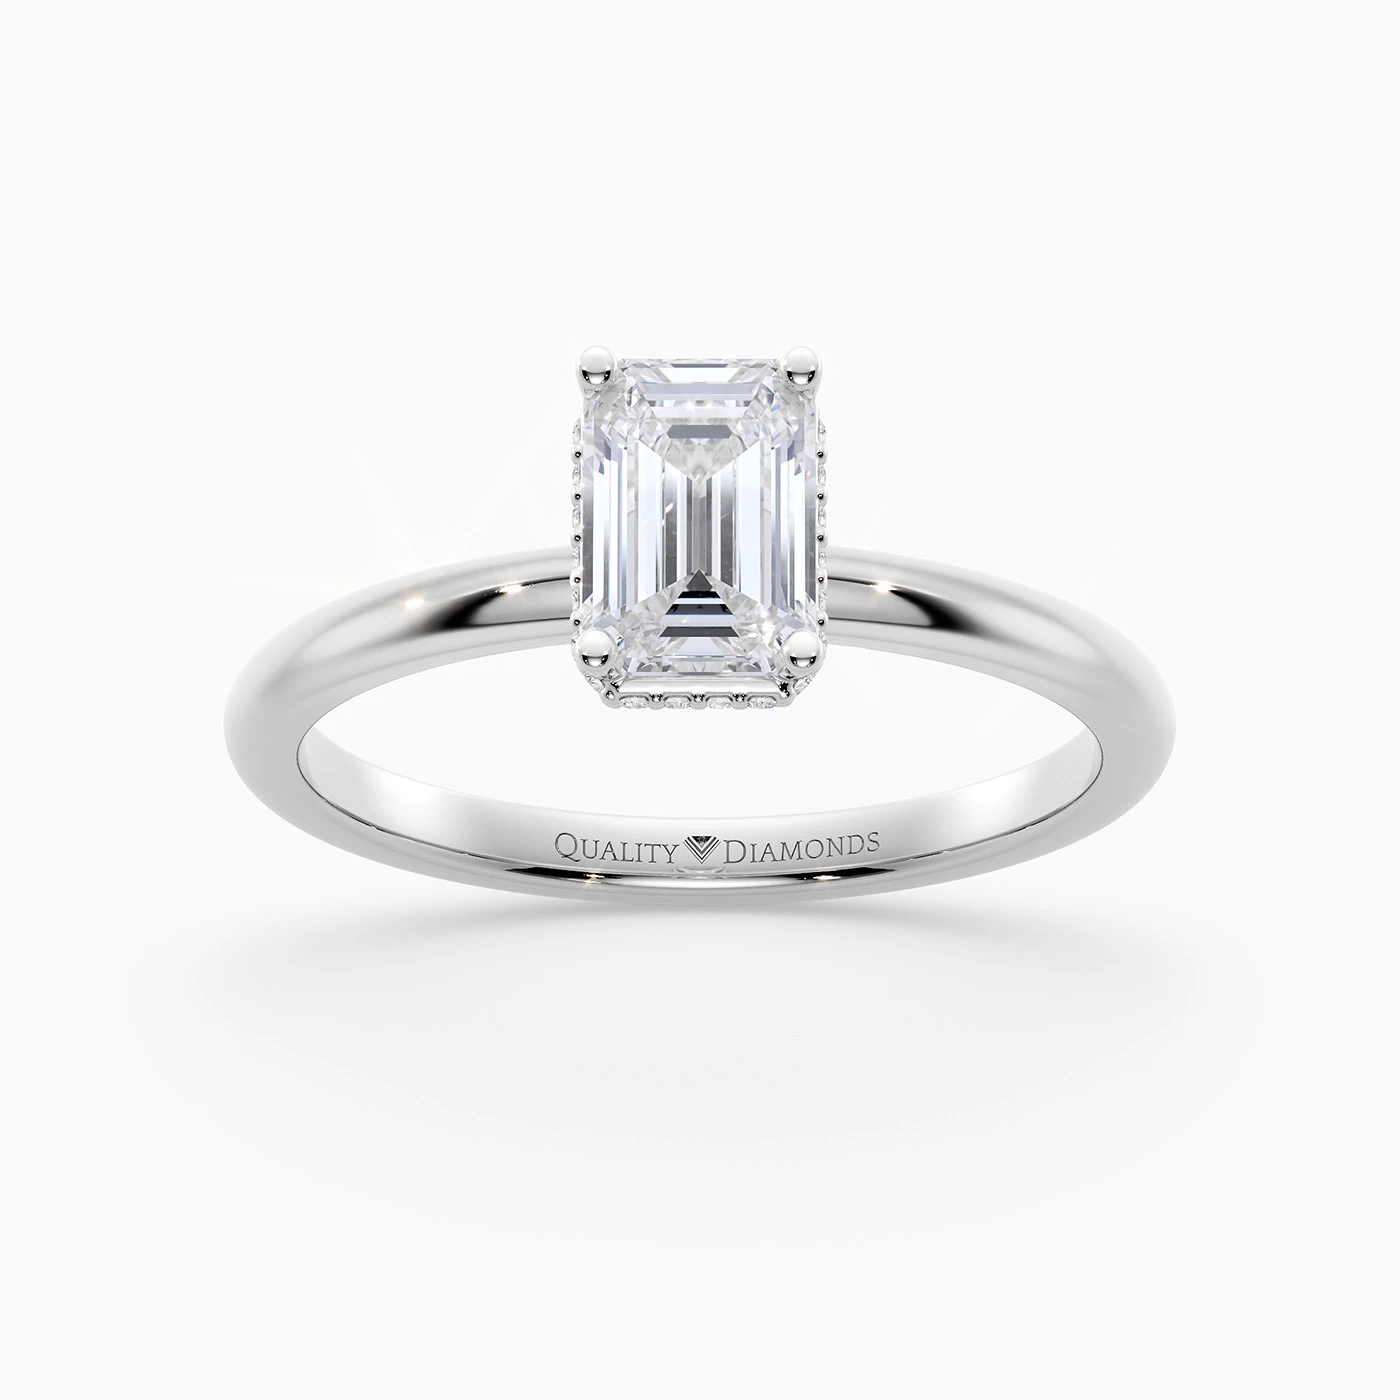 Emerald Liraz Hidden Halo Diamond Ring in 18K White Gold